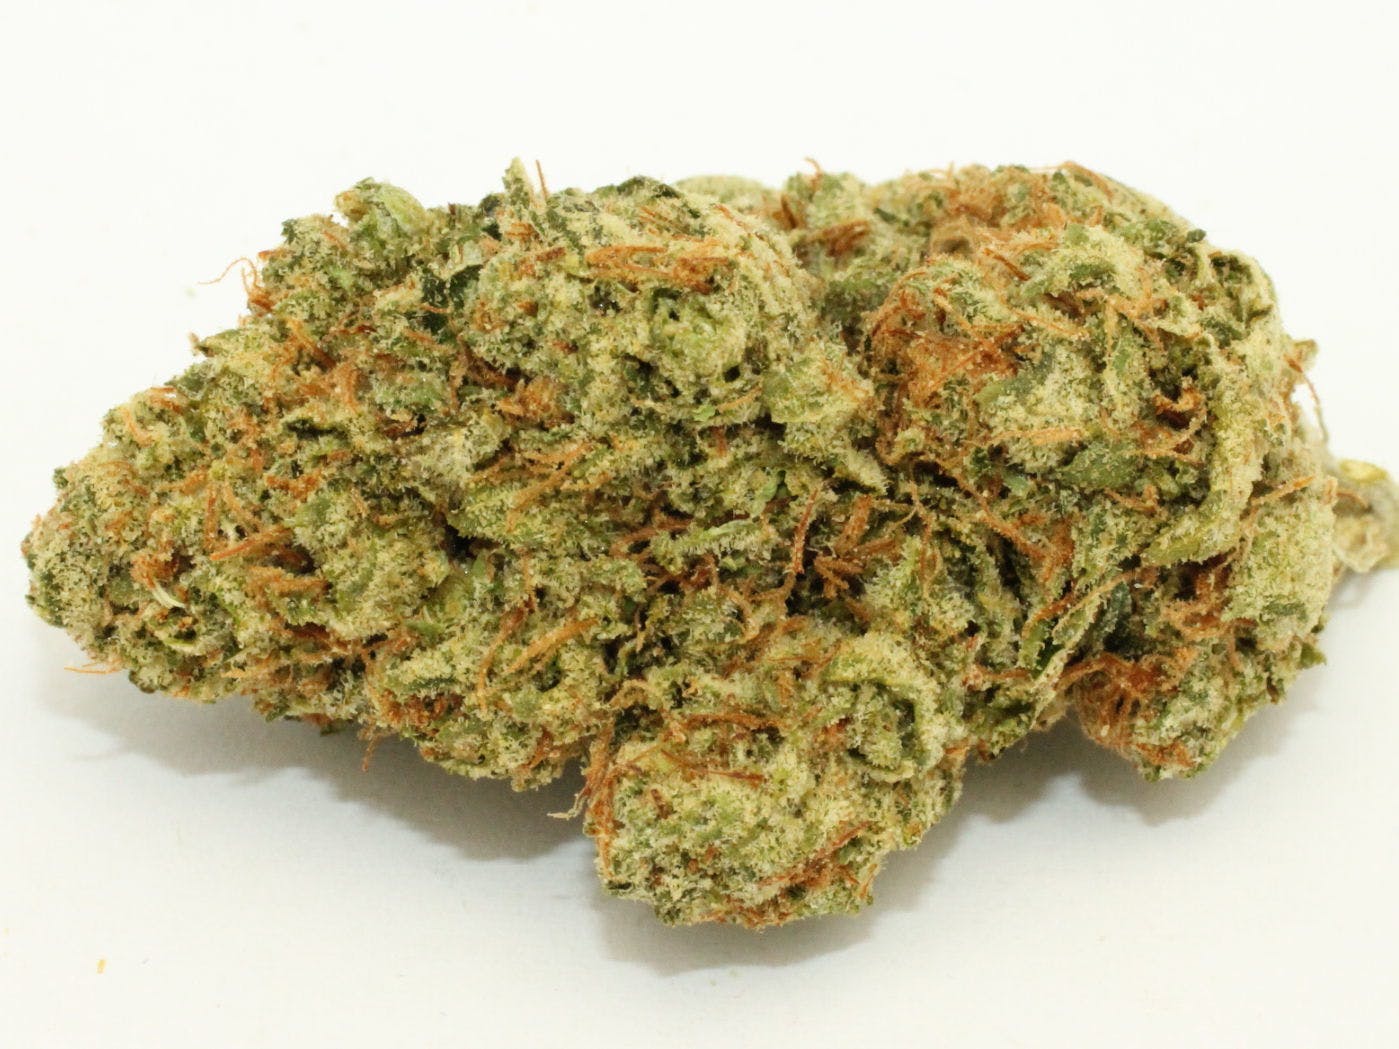 marijuana-dispensaries-green-gears-20-cap-in-los-angeles-topshelf-kosher-kush-2oz270-qp530